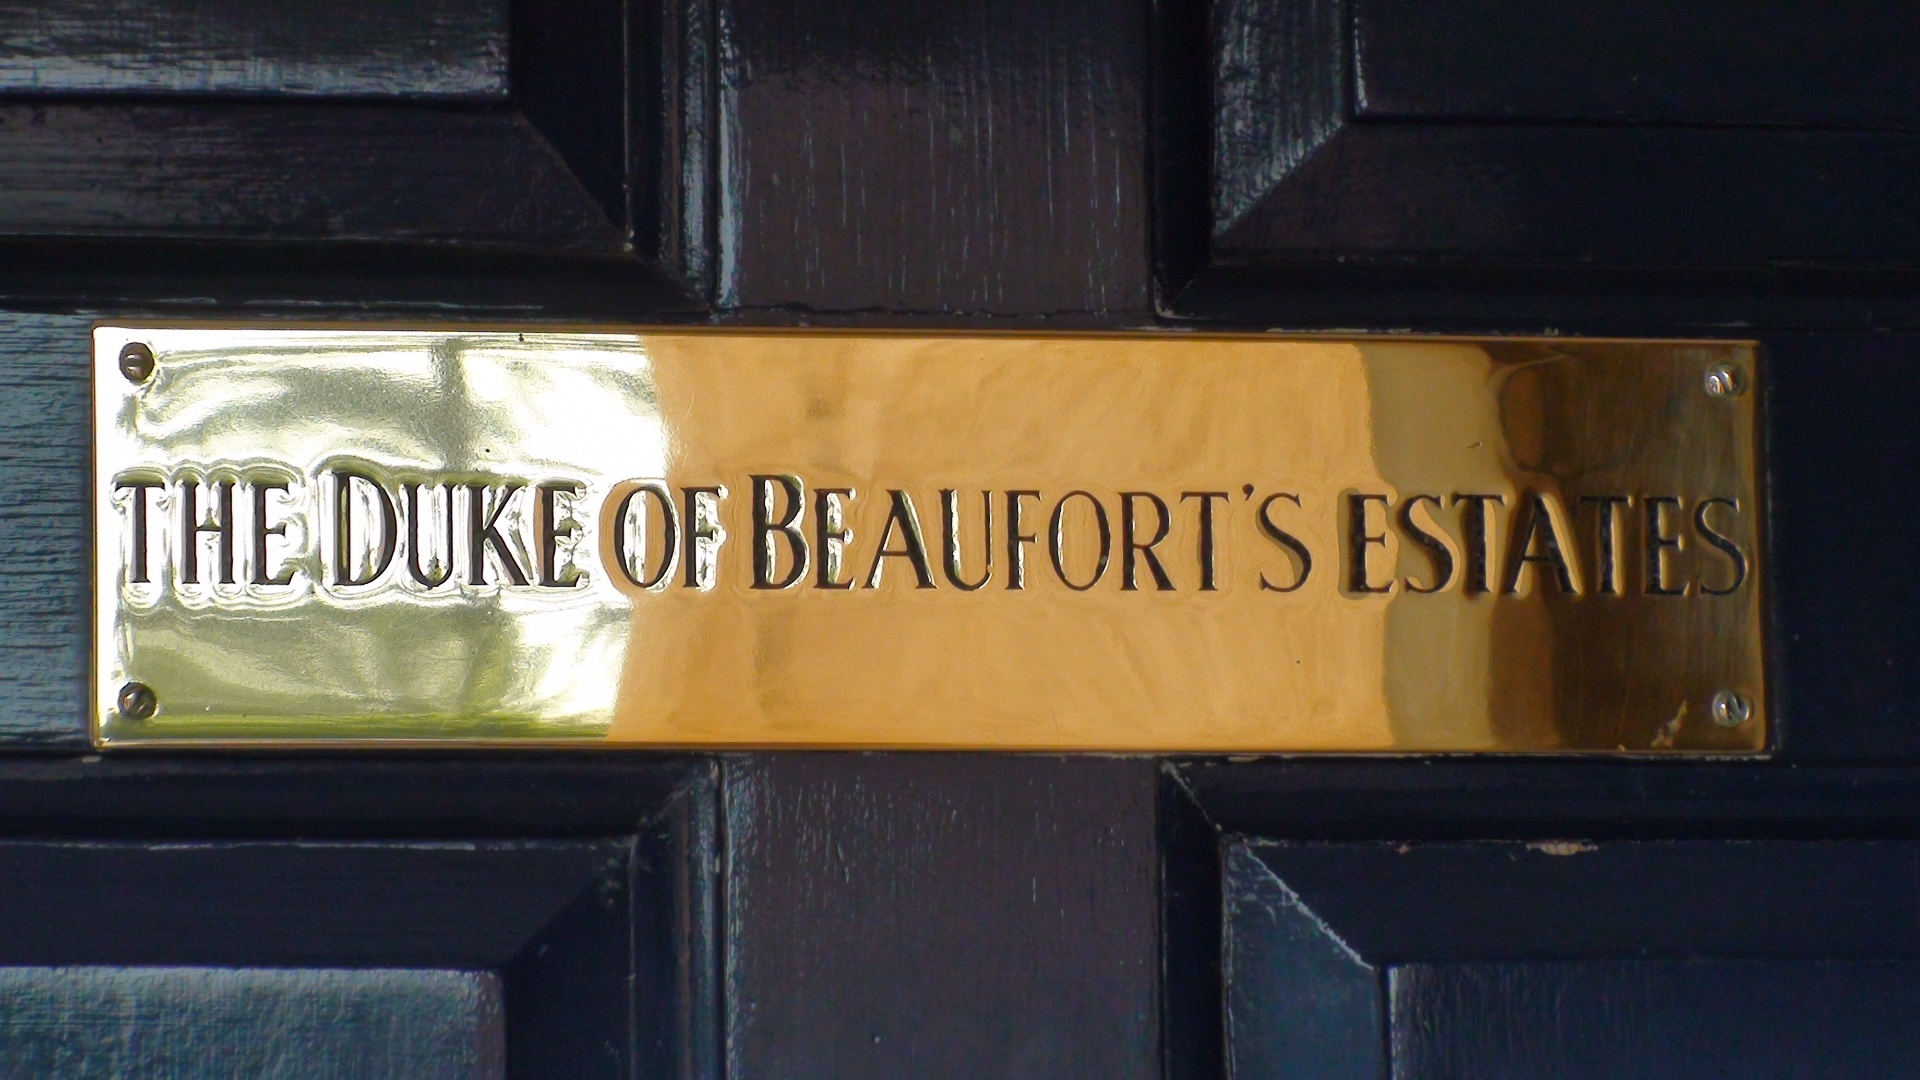  - placa-na-entrada-do-escritorio-do-duque-de-beaufort-onde-se-pode-alugar-para-casamentos-congressos-e-outros-eventos-o-palacete-onde-foi-inventado-o-badminton-1343394132221_1920x1080